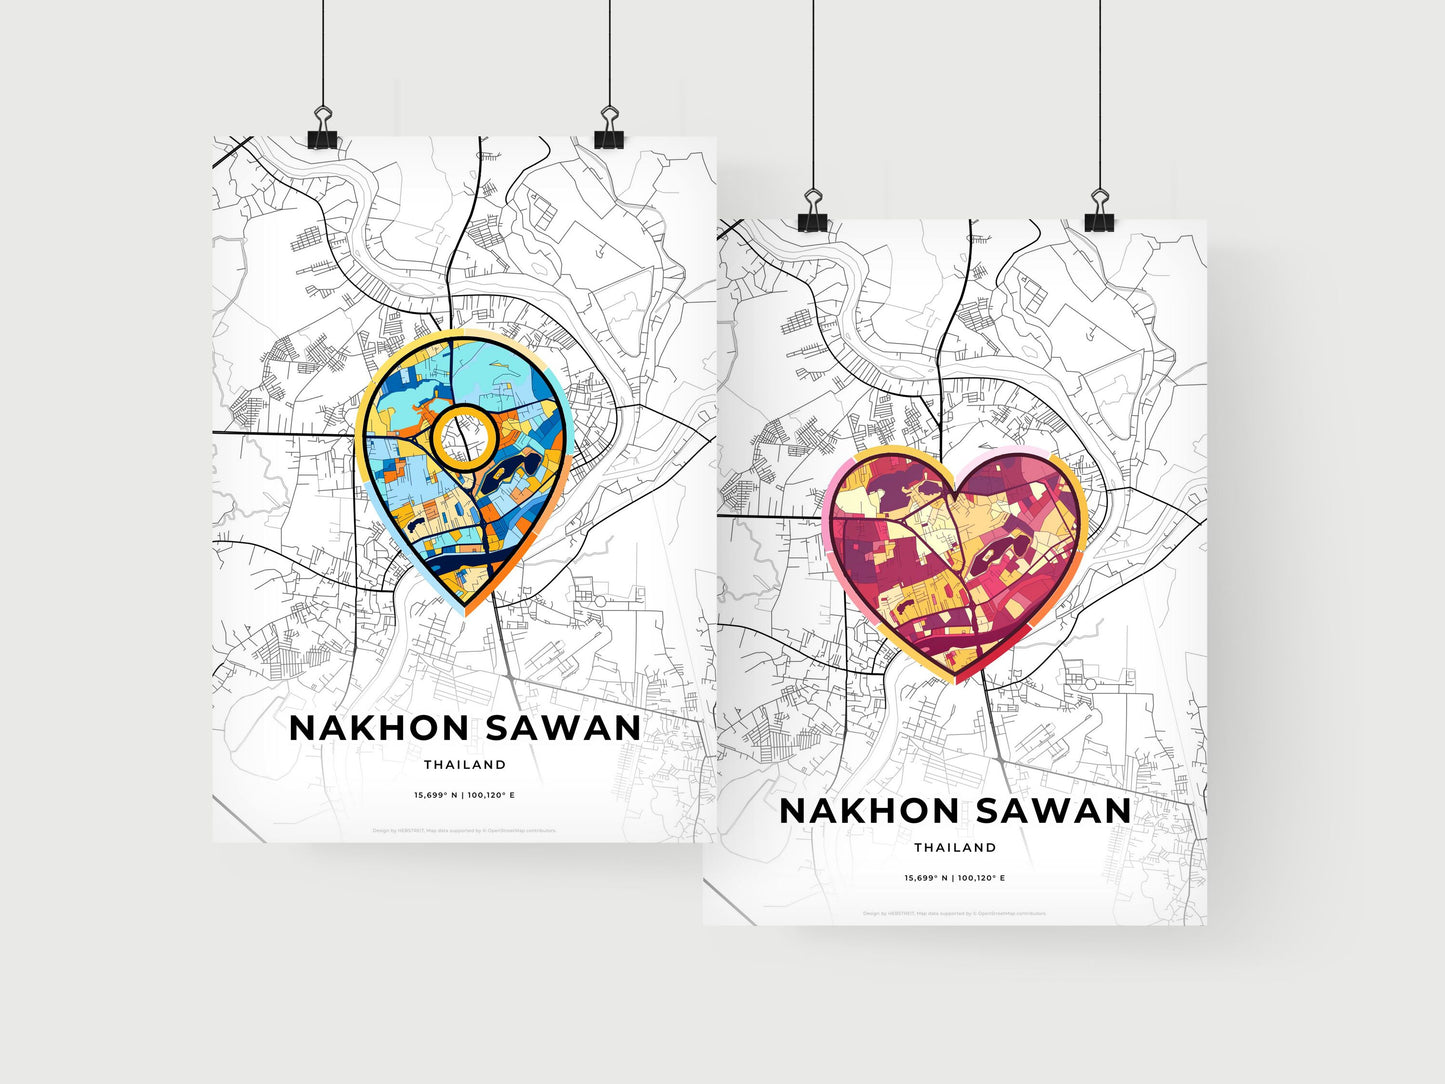 NAKHON SAWAN THAILAND minimal art map with a colorful icon.